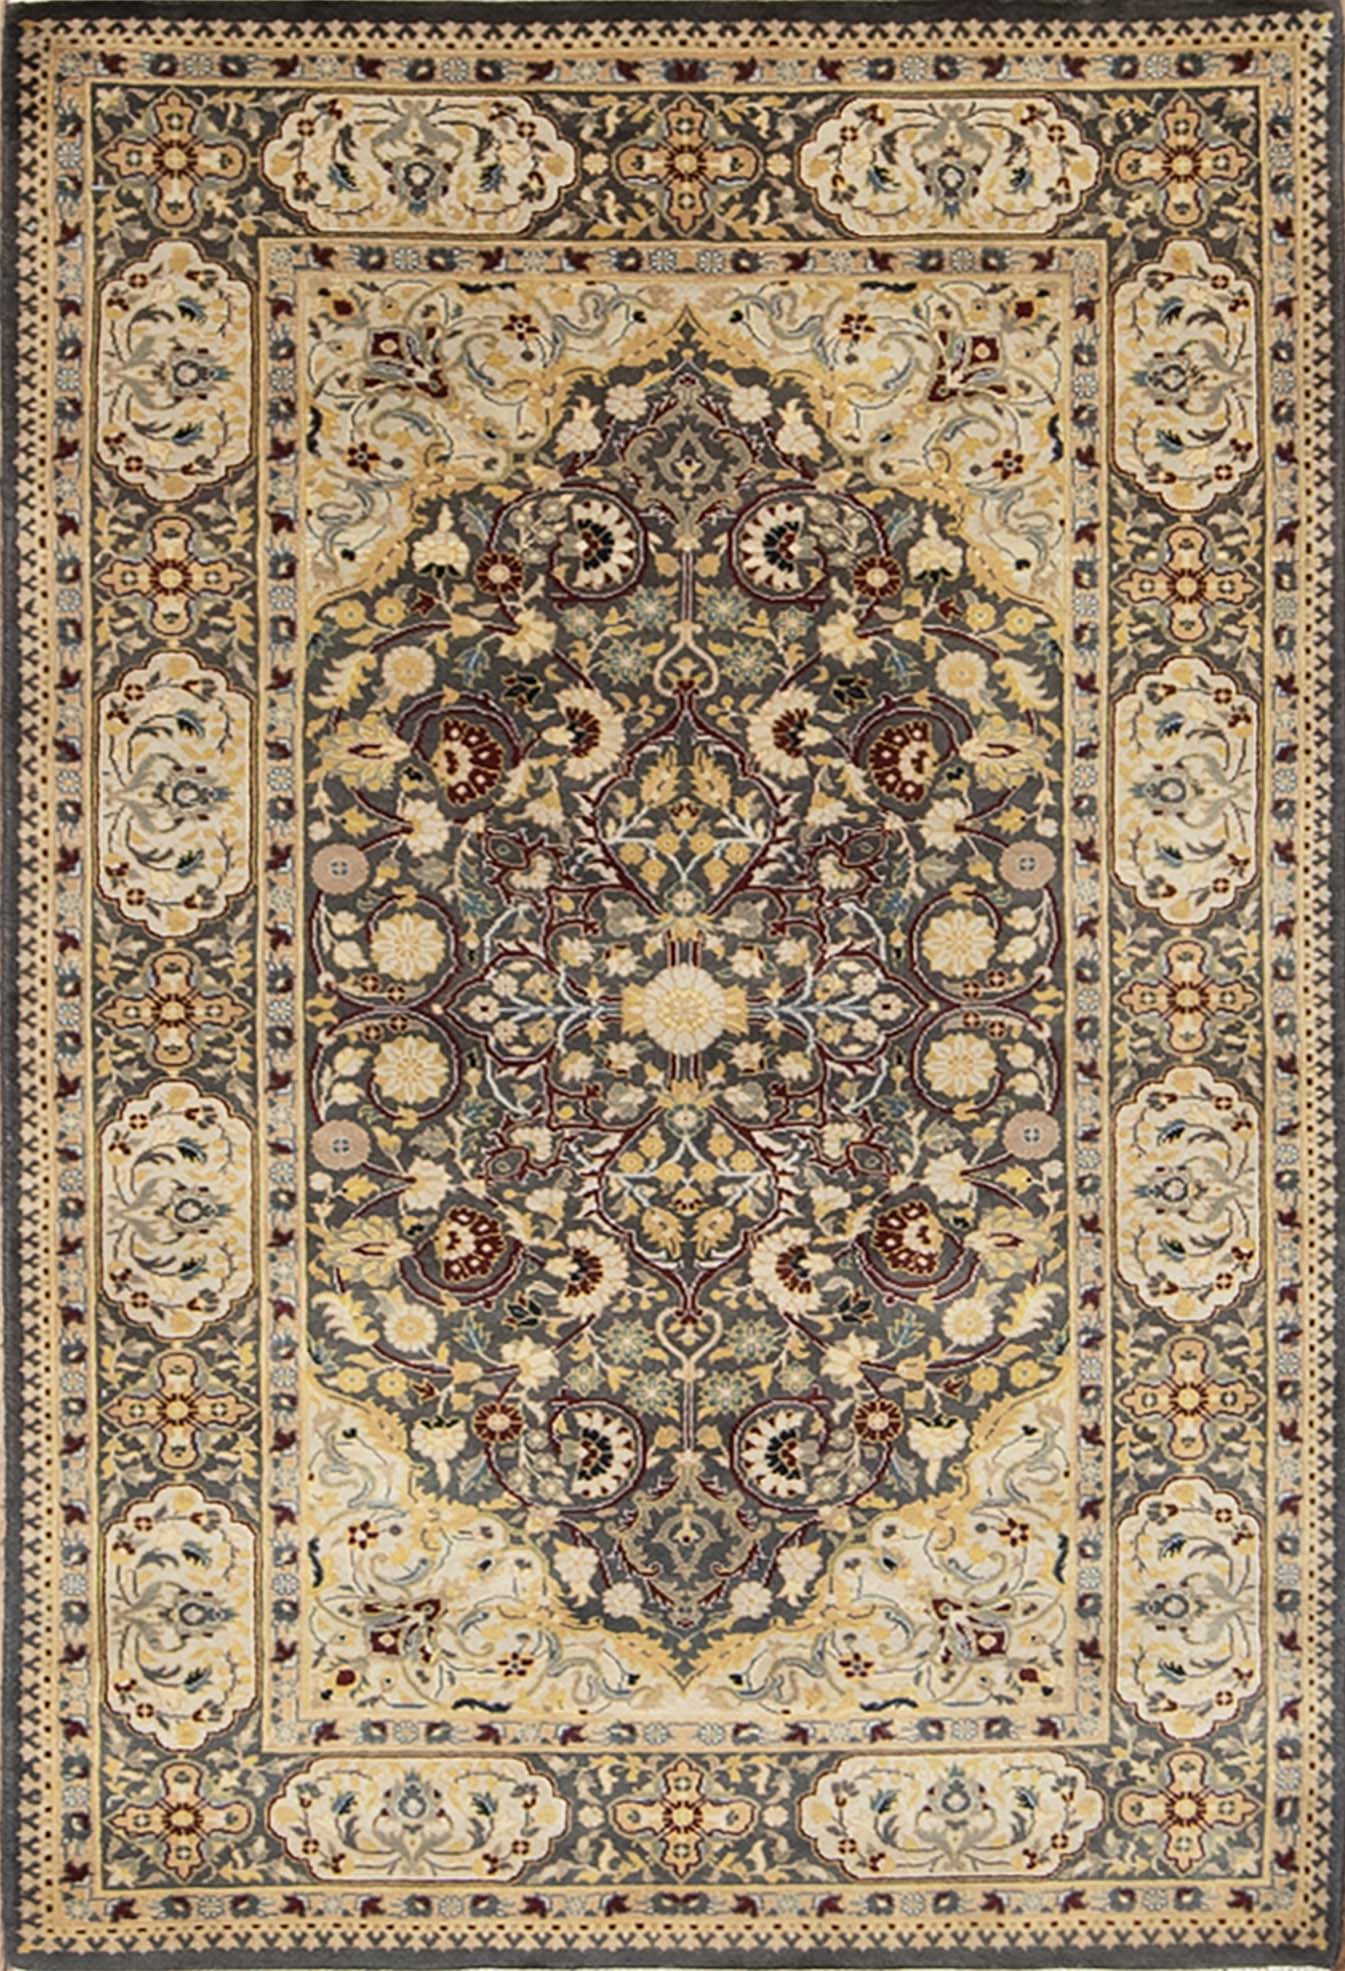 Wool oriental rug. Handmade multicolor Persian Tabriz design rug made in Pakistan. Size 3.1x5.4.